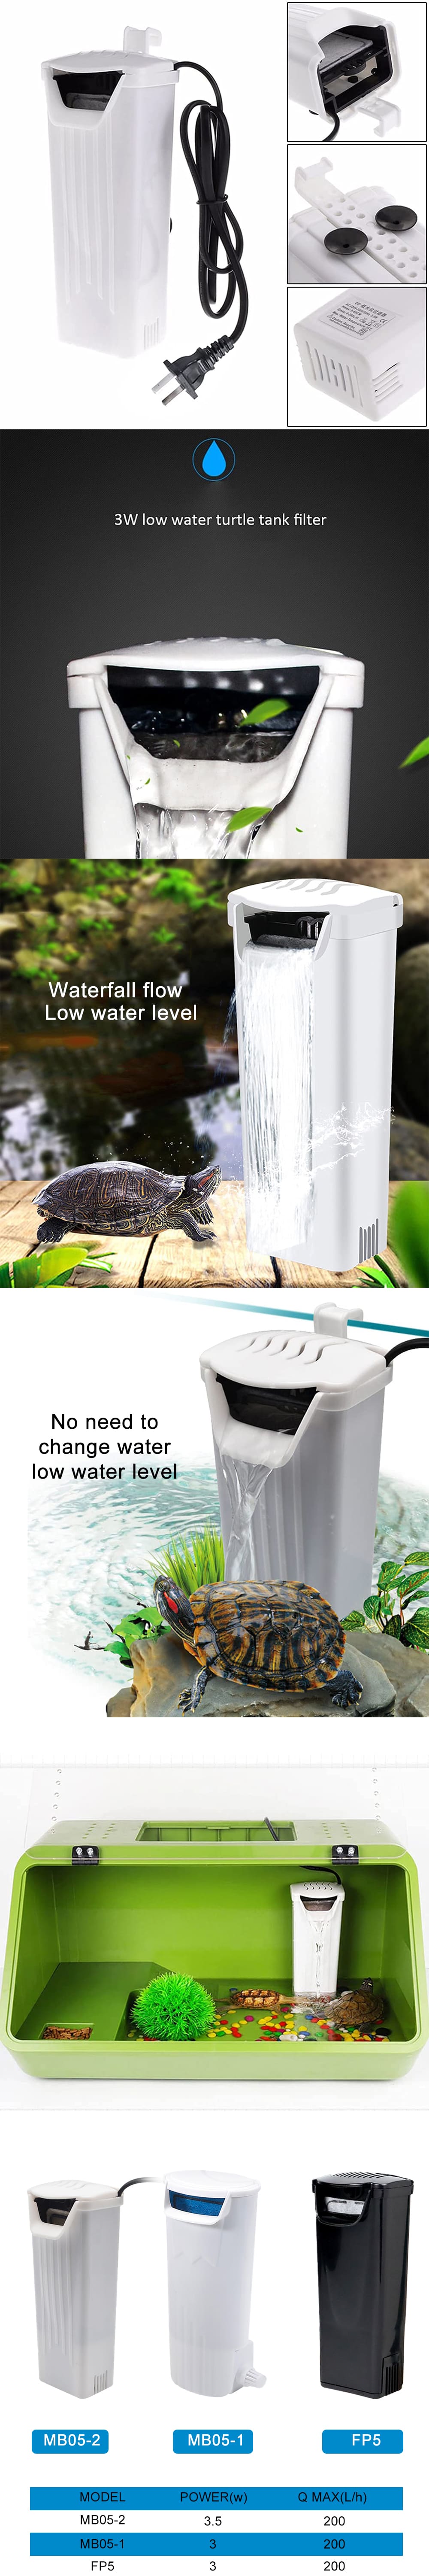 Aquarium low water filter